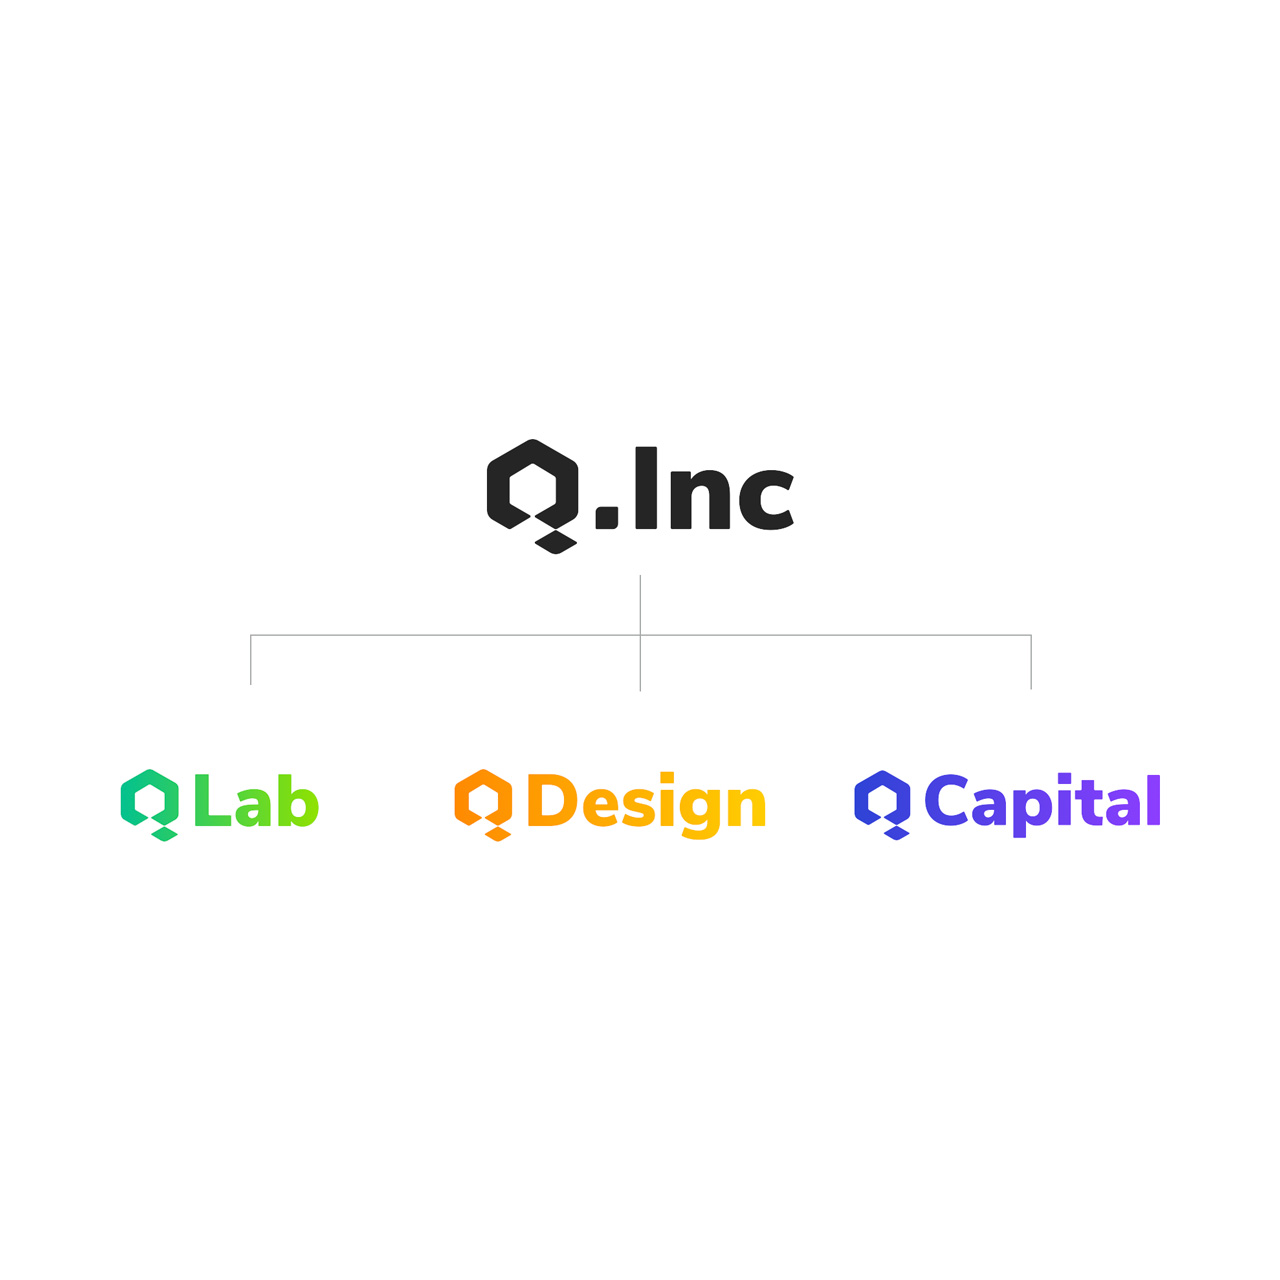 Q.Inc brand architecture